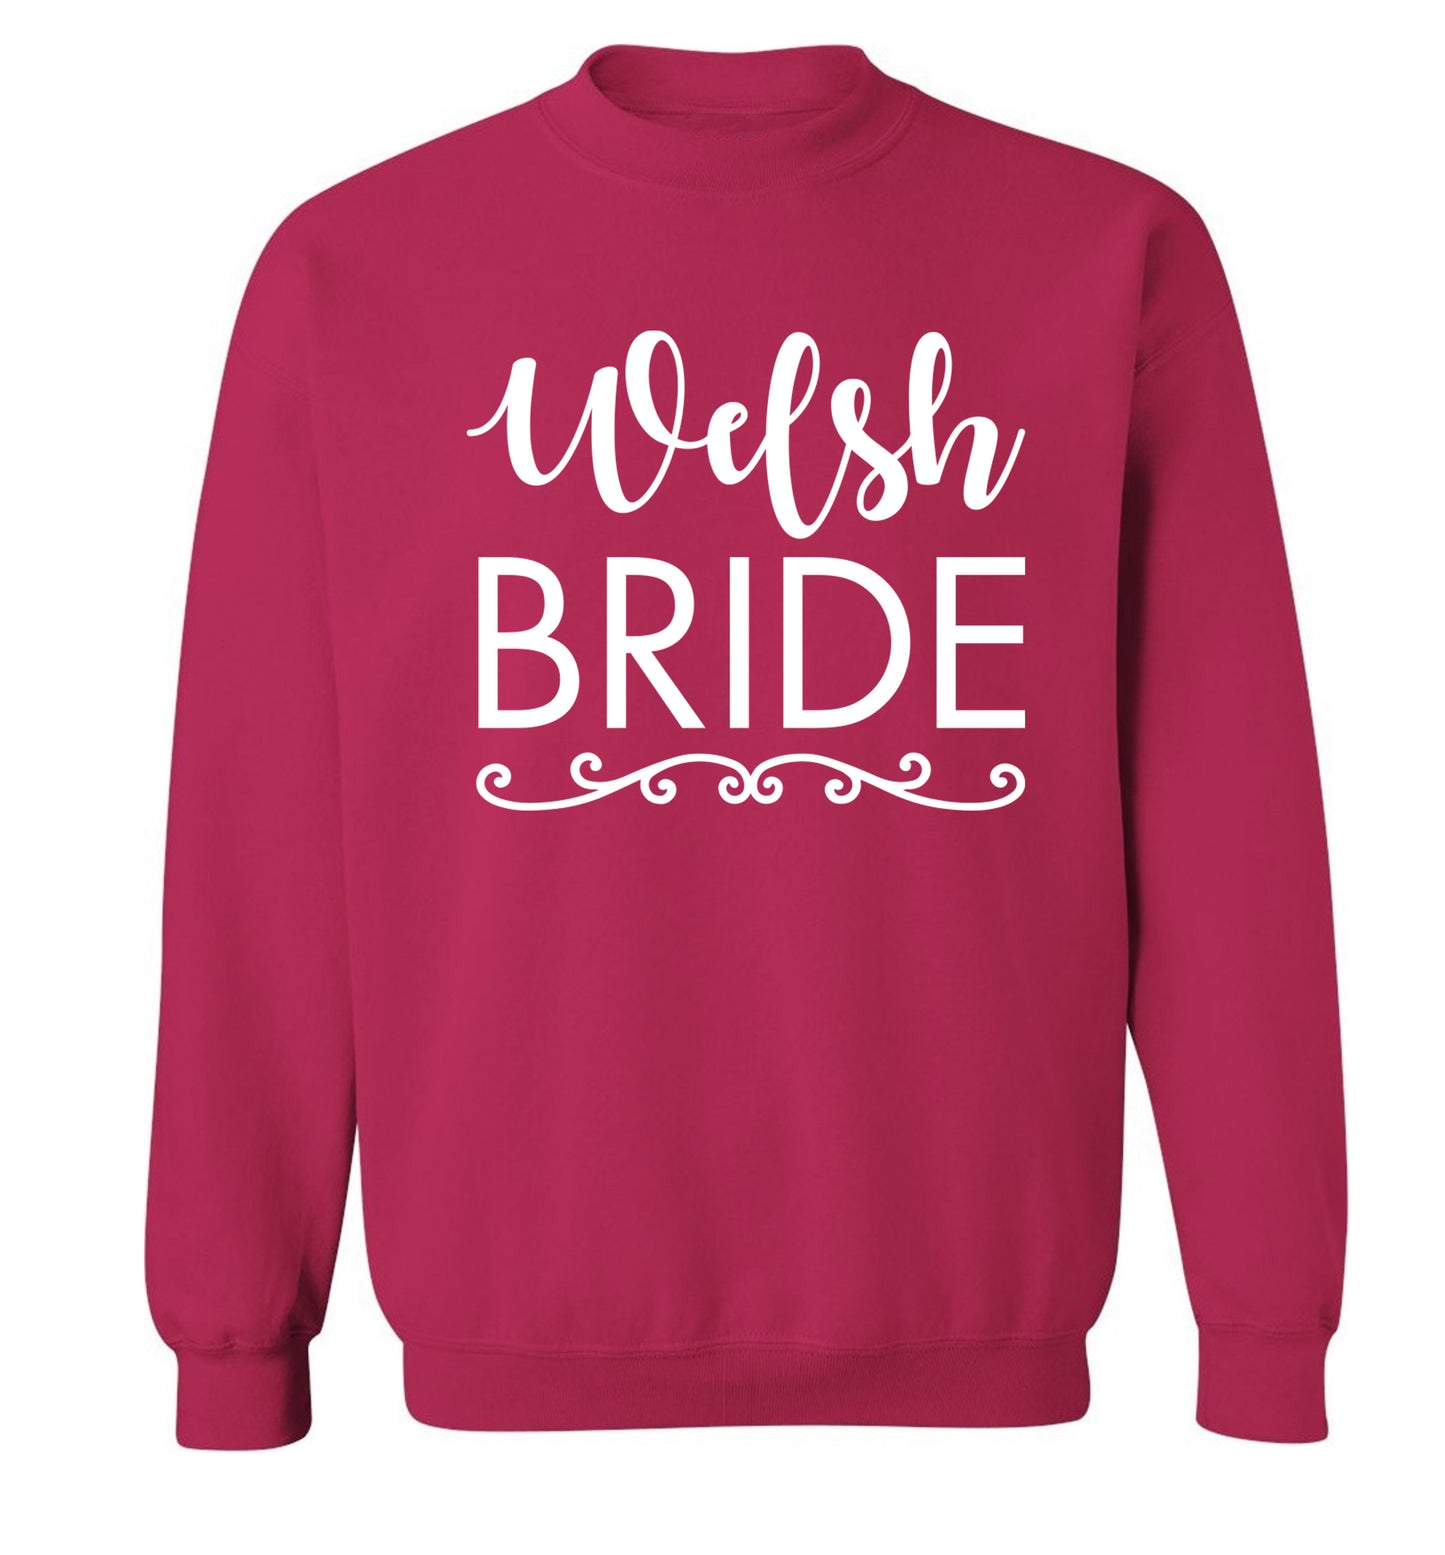 Welsh Bride Adult's unisex pink Sweater 2XL